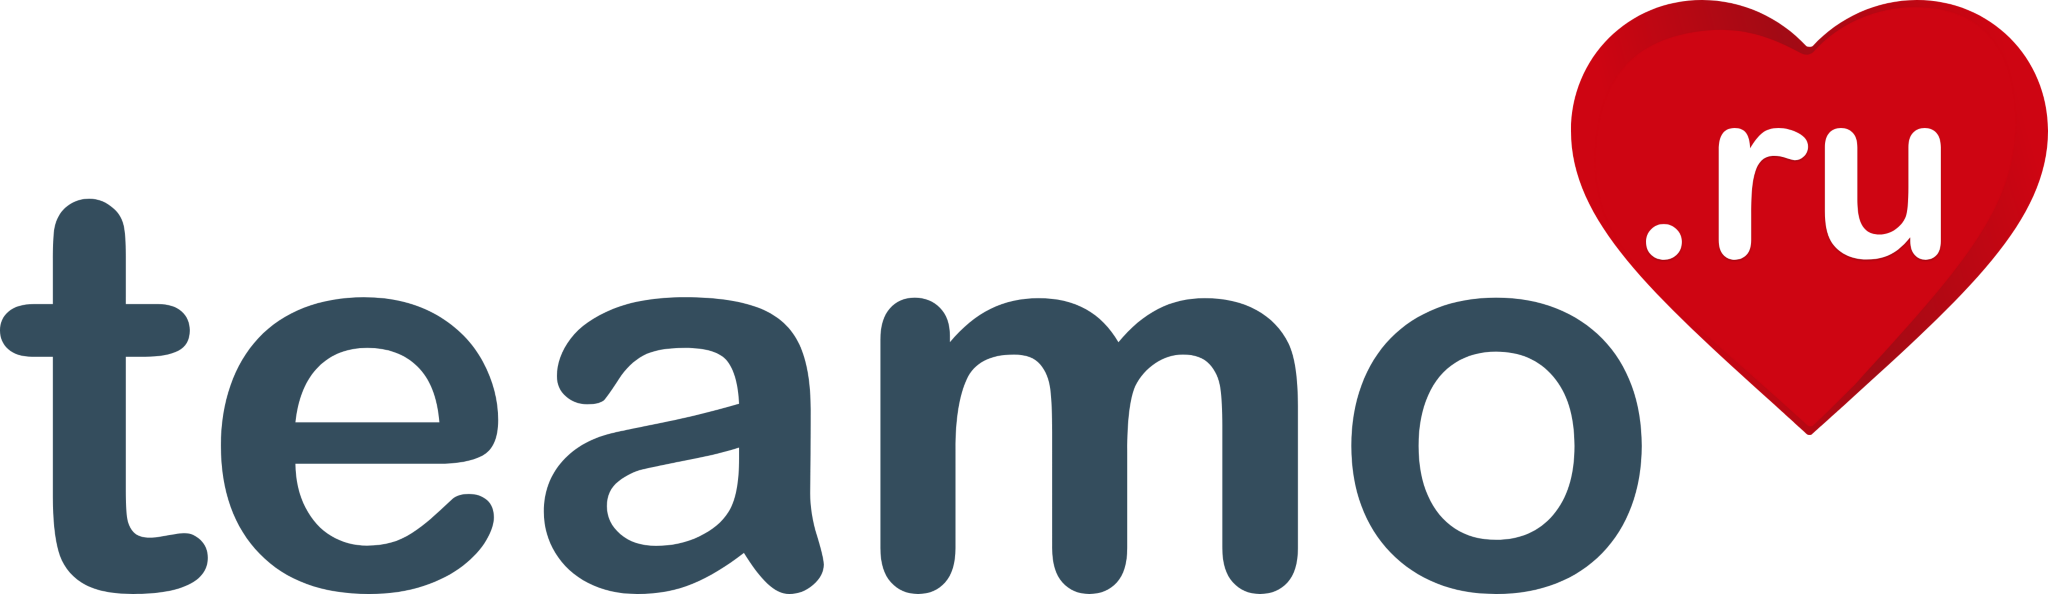 Теамо значок. Teamo.ru. Teamo.ru лого. Логотип для сайта. Лолстори ру